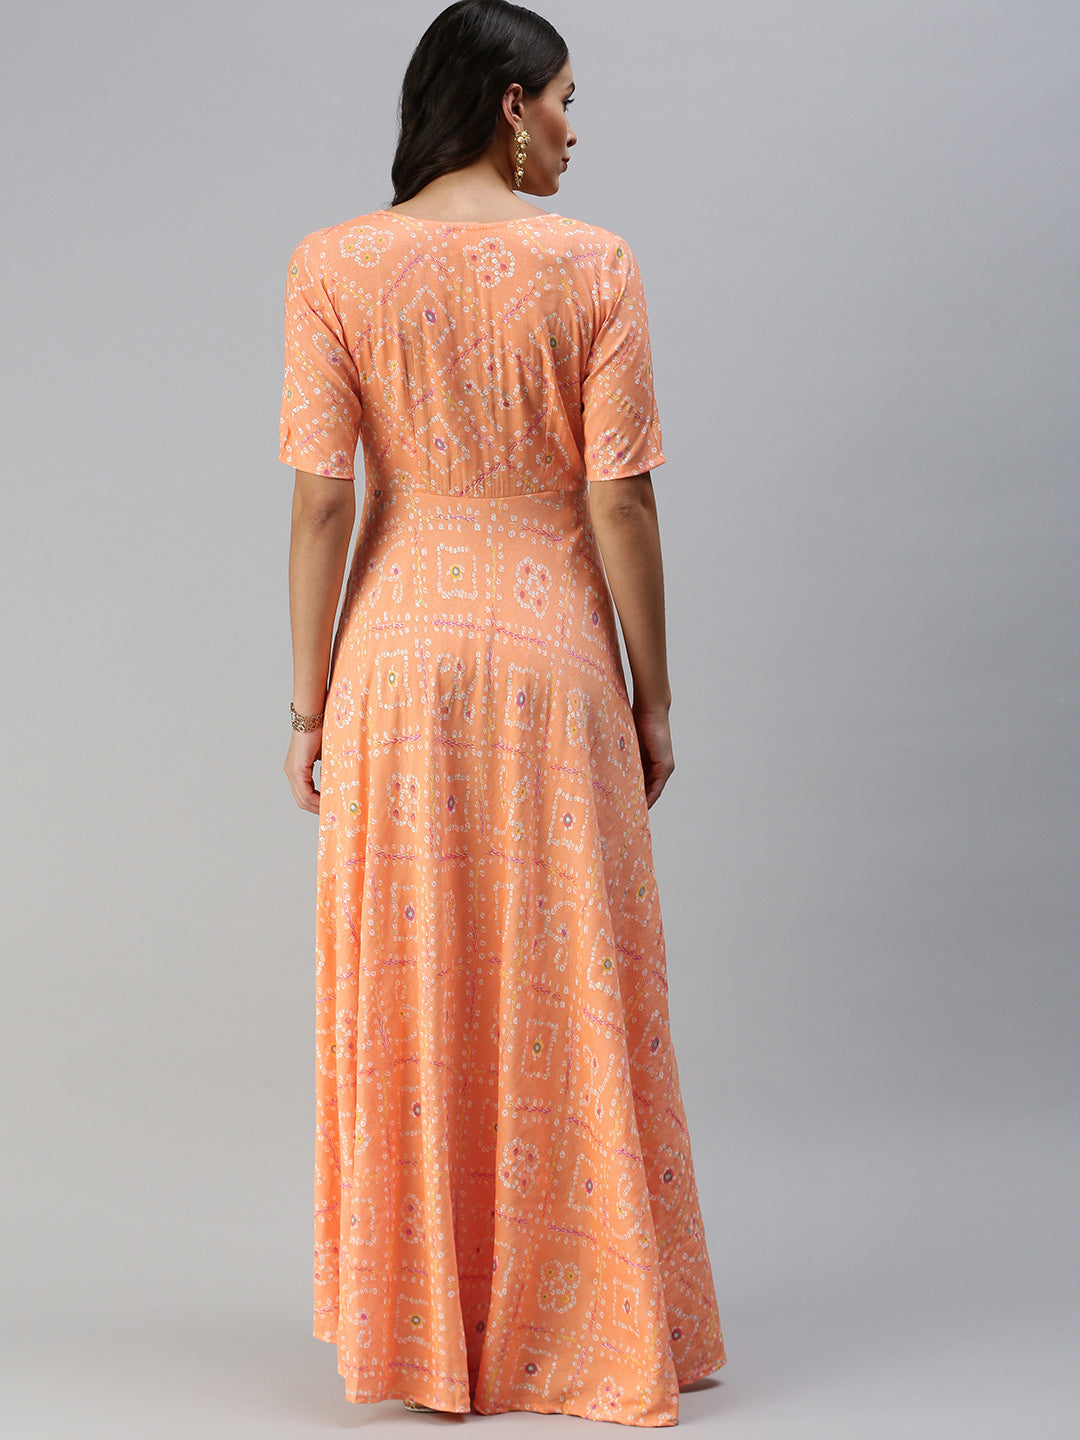 Coral Orange & White Ethnic Motifs Printed Maternity Maxi Dress